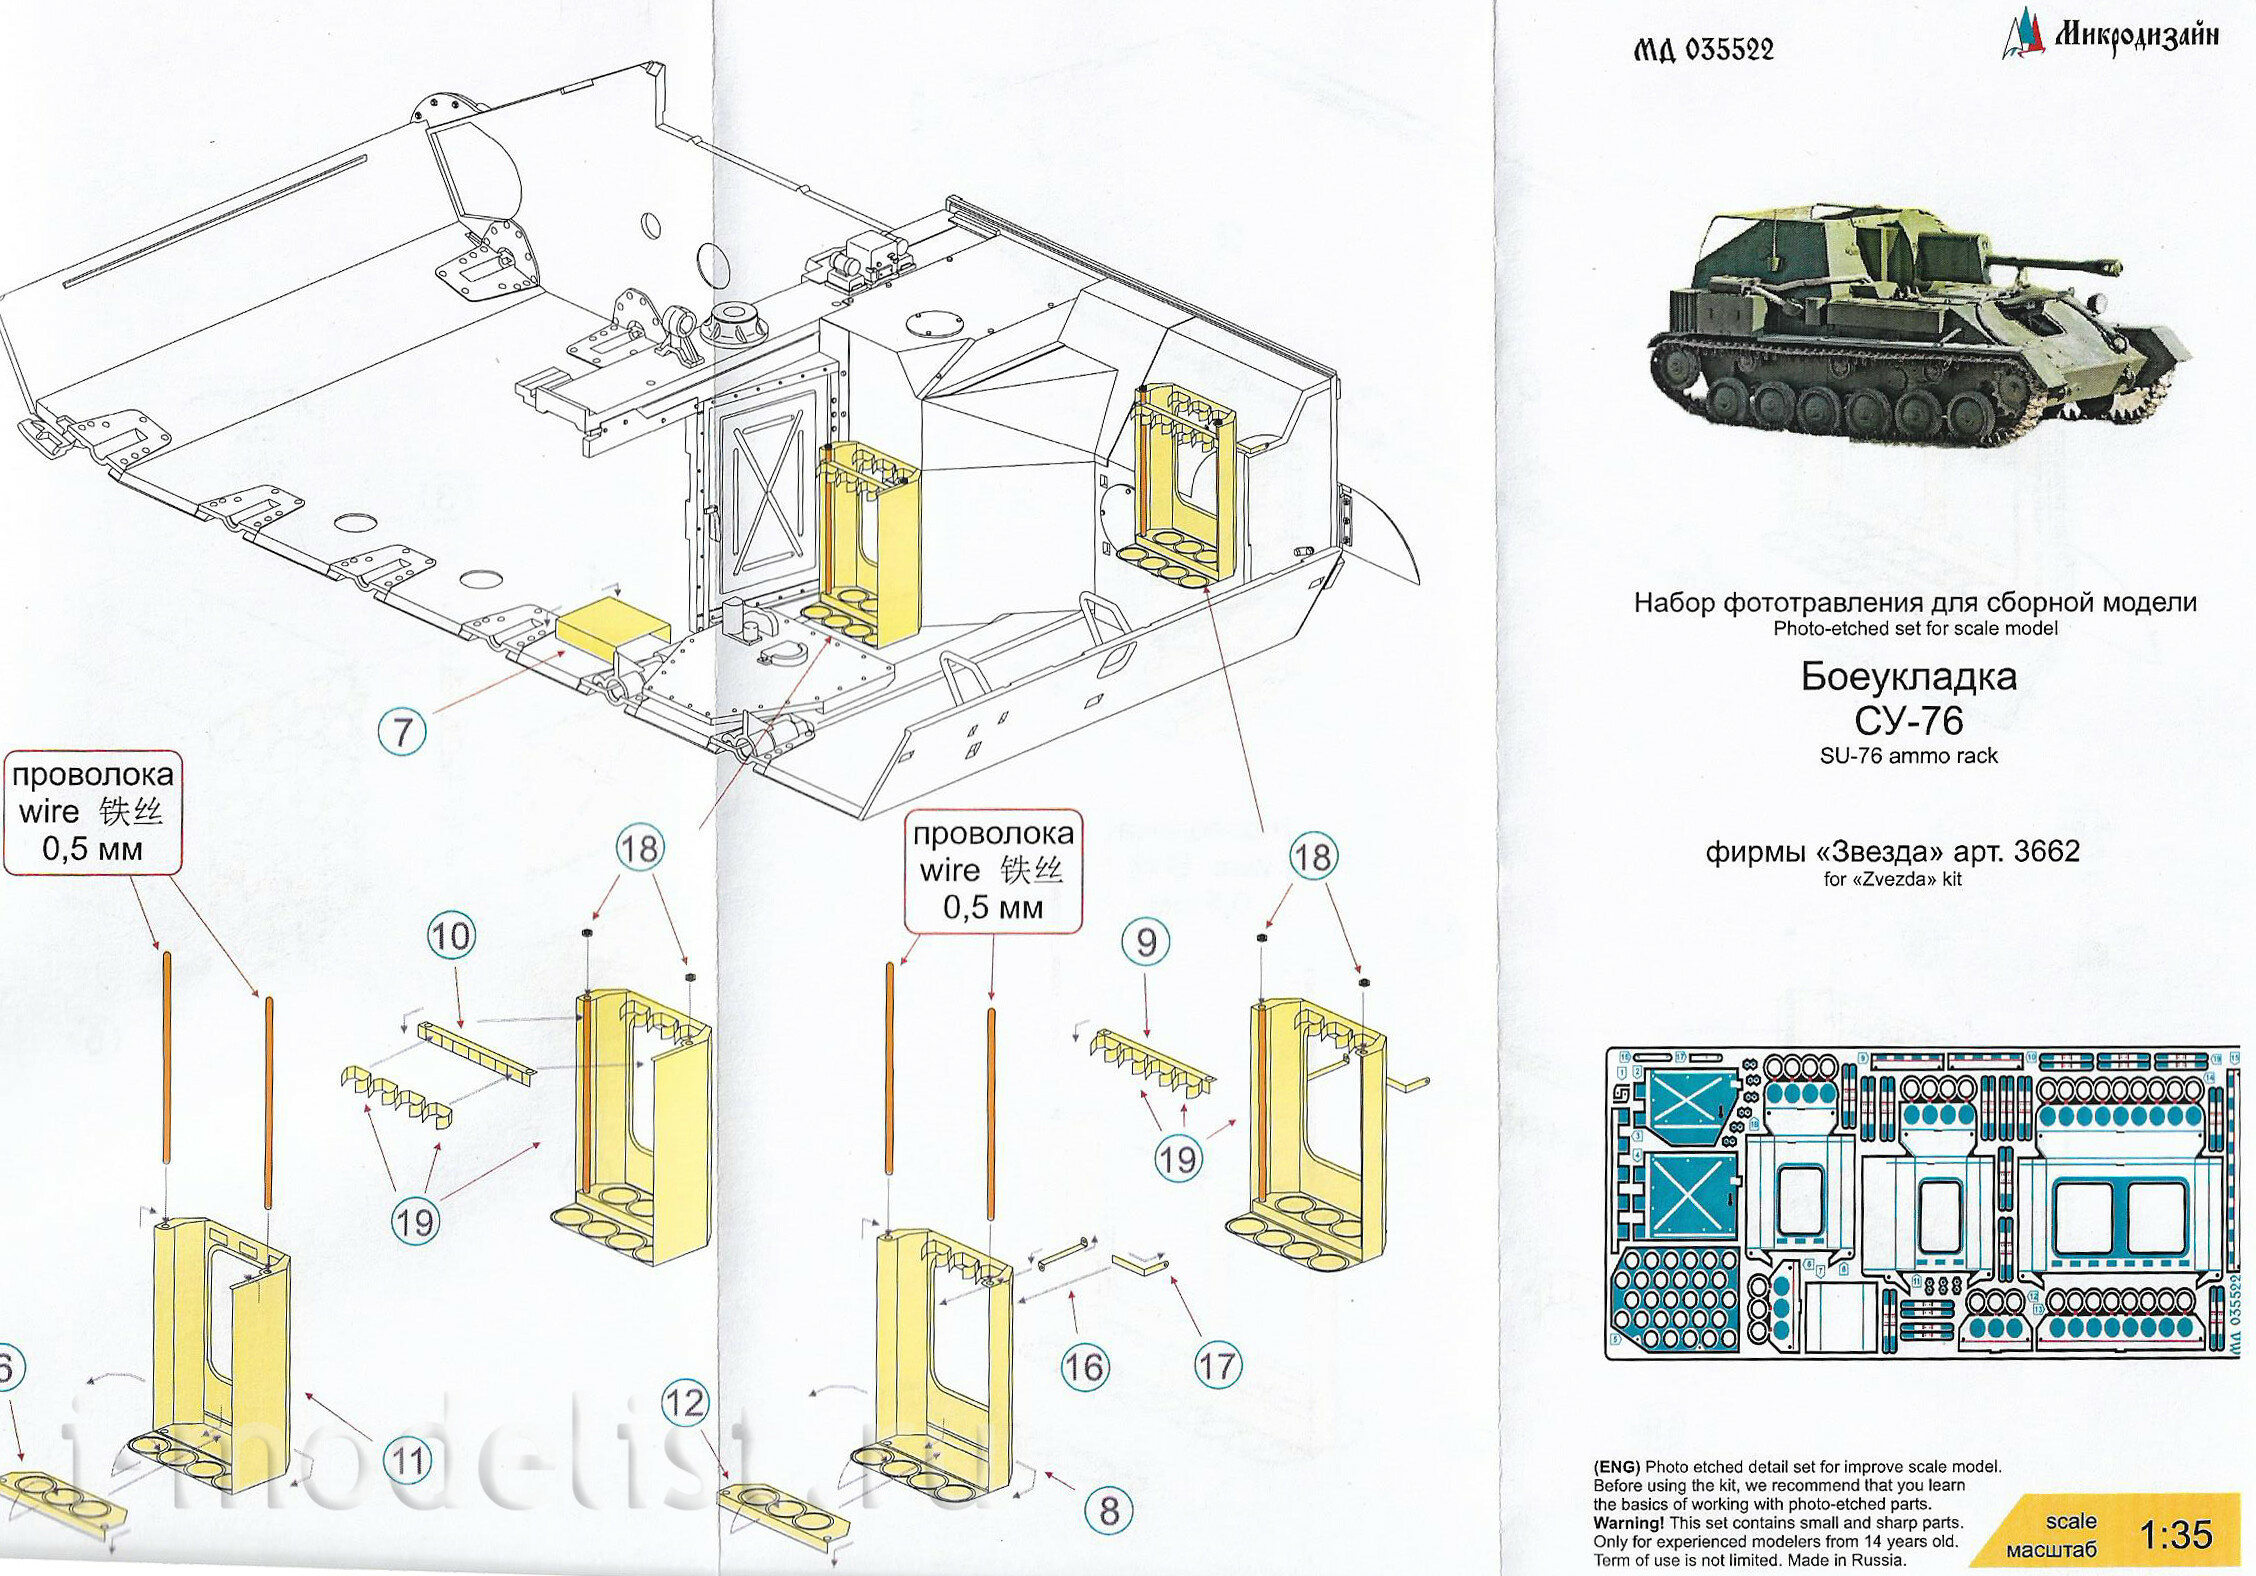 035522 Microdesign 1/35 Ammunition for SU-76 (Zvezda)